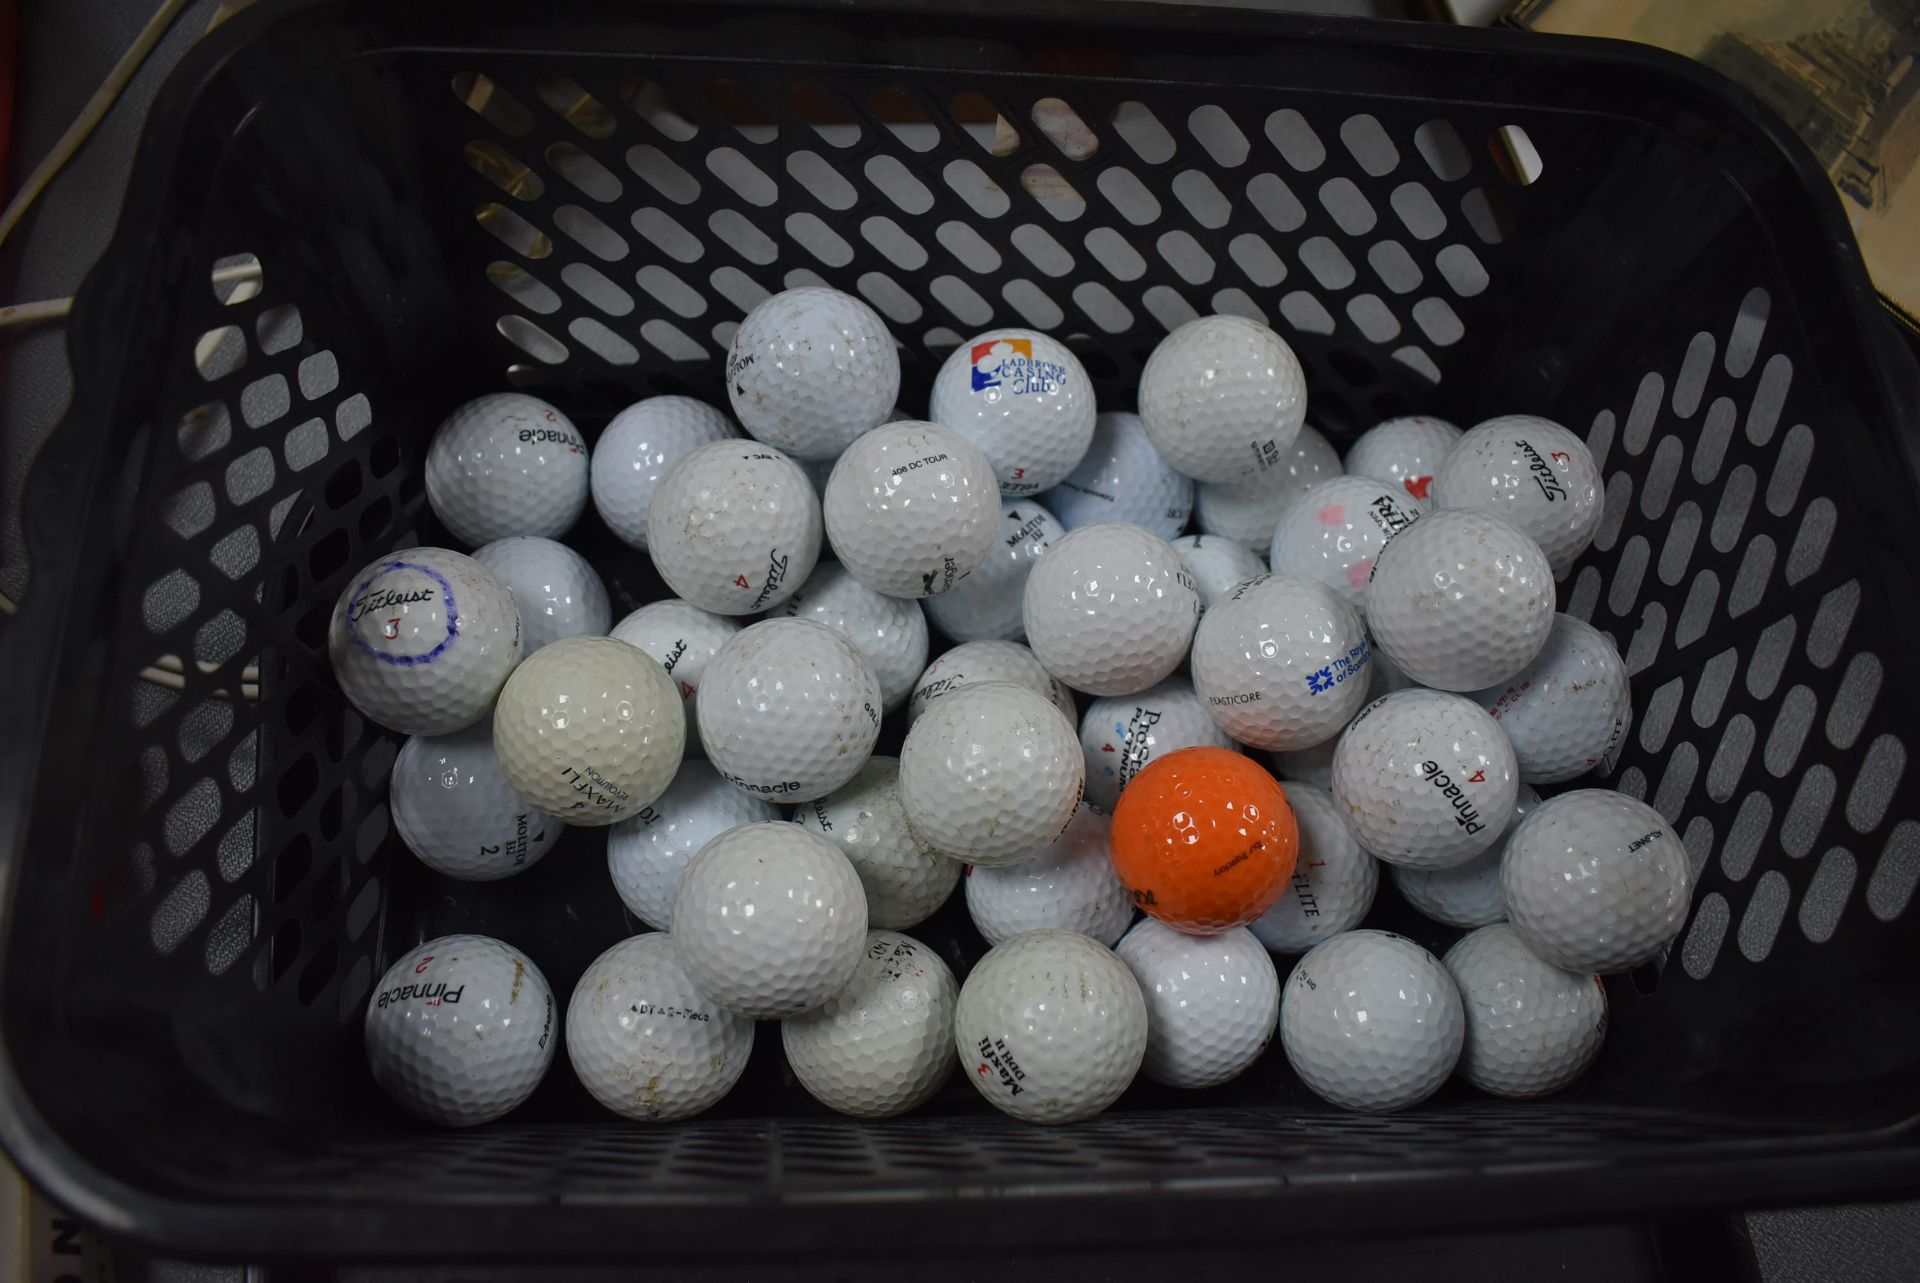 Five Packs of New Spalding Golf Balls plus a Baske - Image 2 of 2